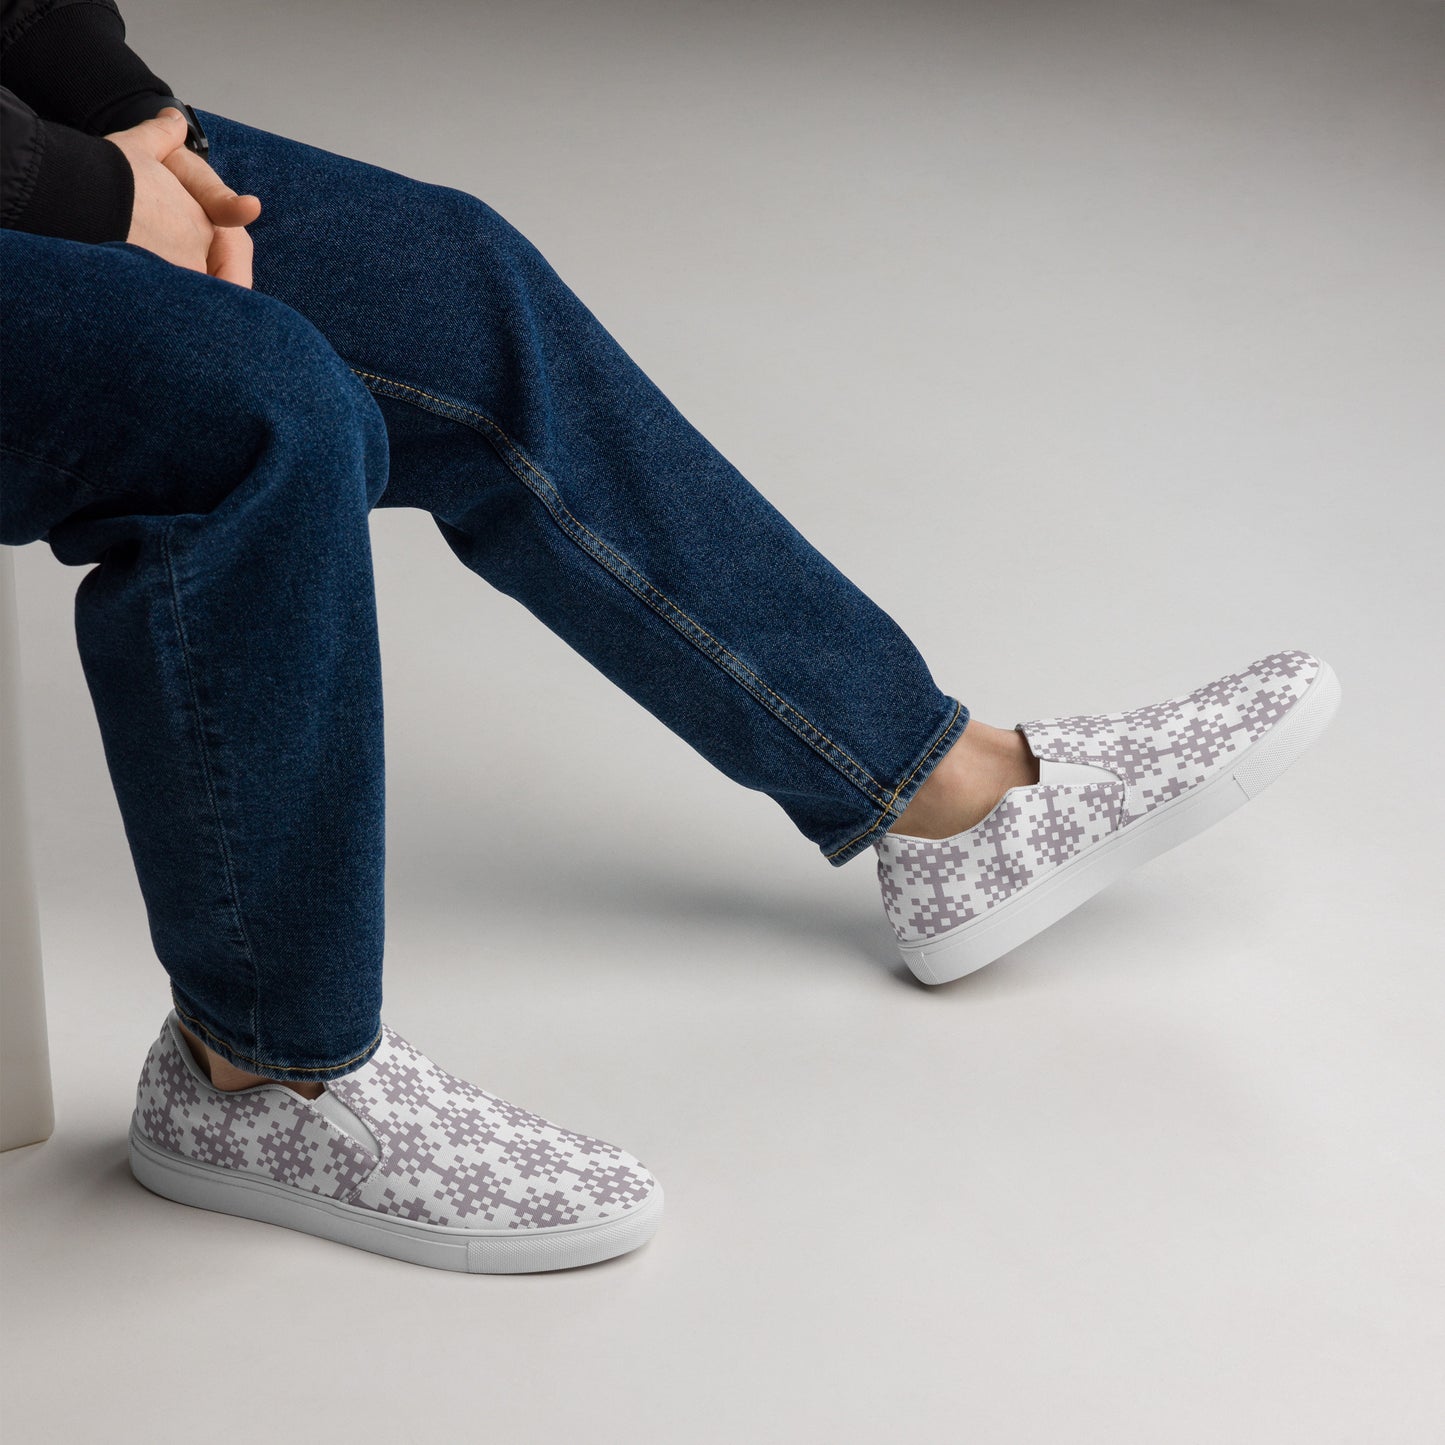 COM4T PC Pixel Men’s Slip-On Canvas Fashion Shoes by IOBI Original Apparel